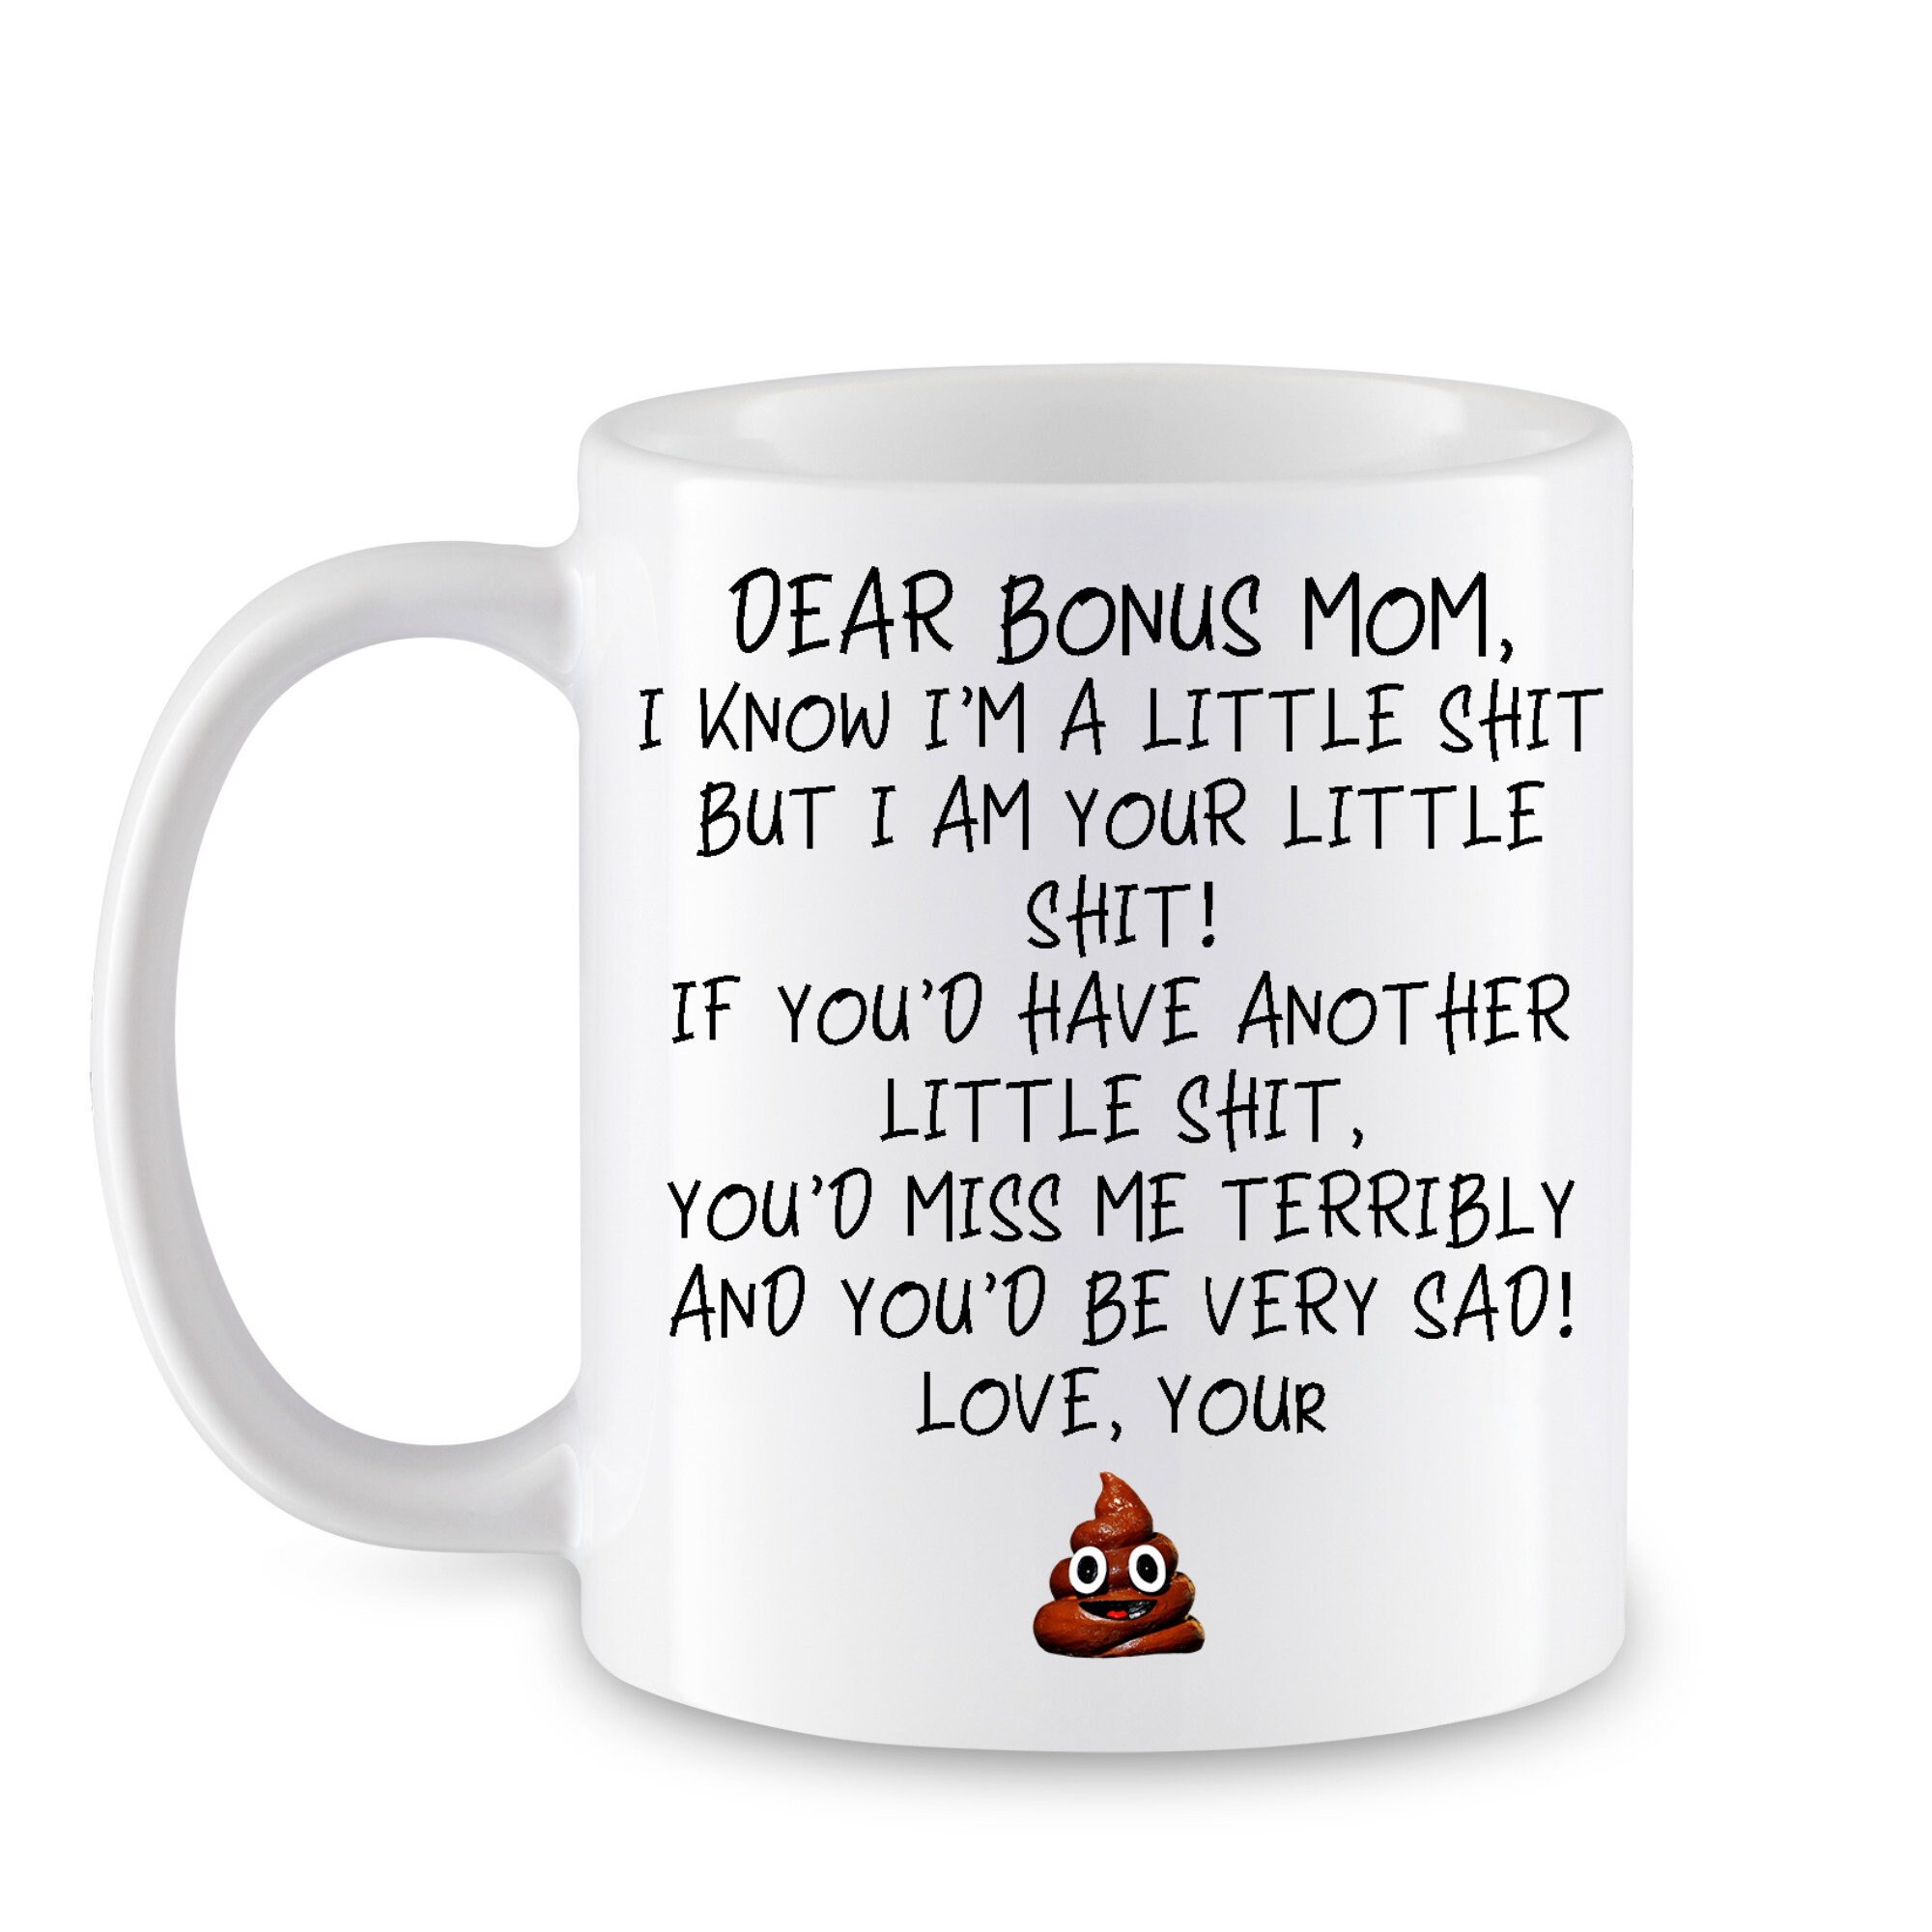 bonus-mom-bonus-mom-gift-bonus-mom-mug-mothers-day-present-etsy